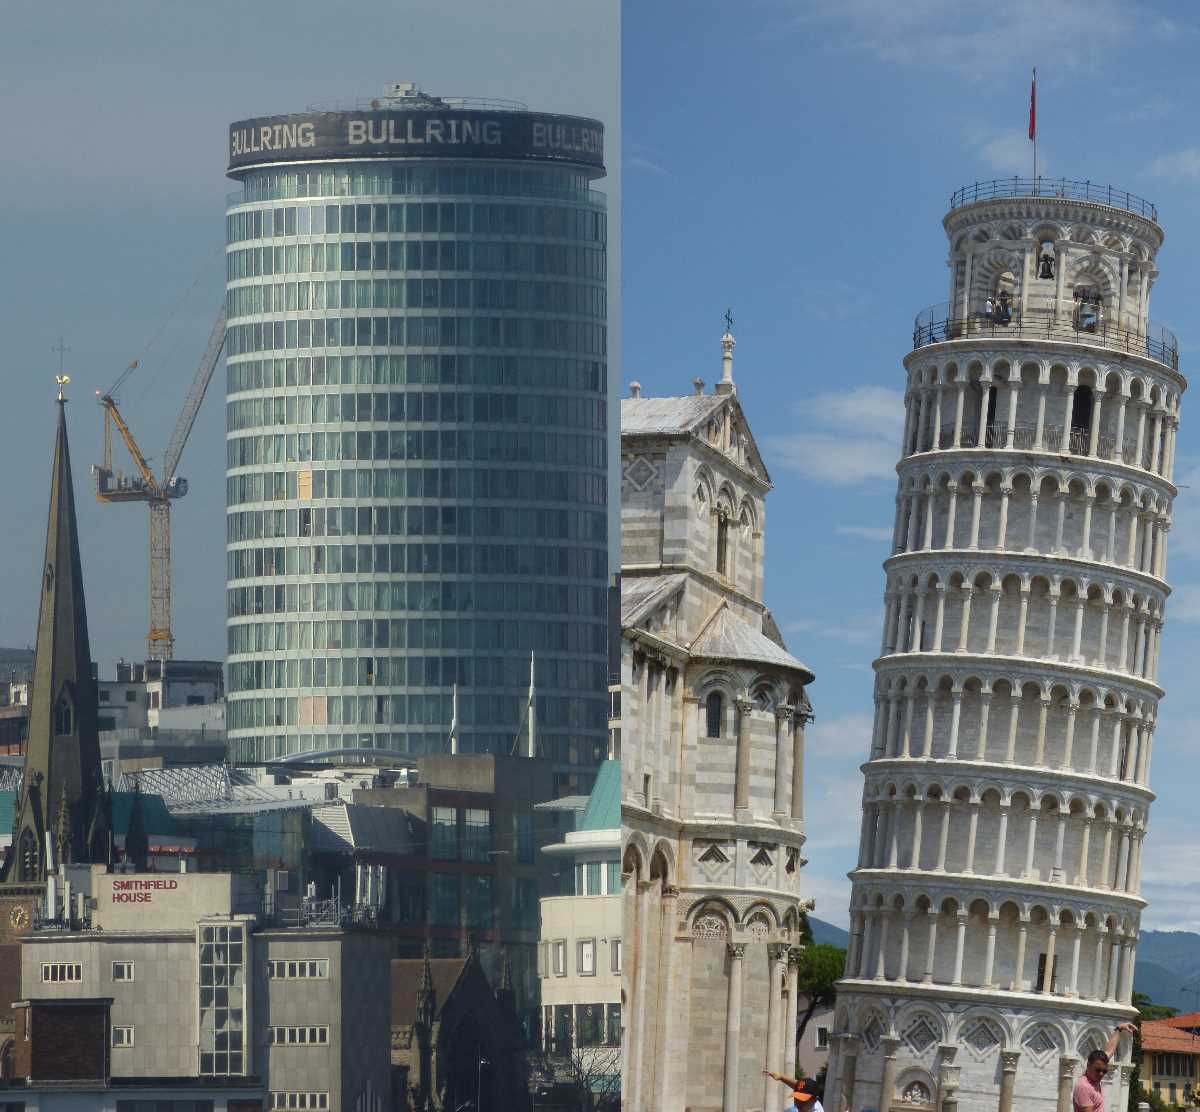 Round towers in Birmingham, UK and Pisa, Italy